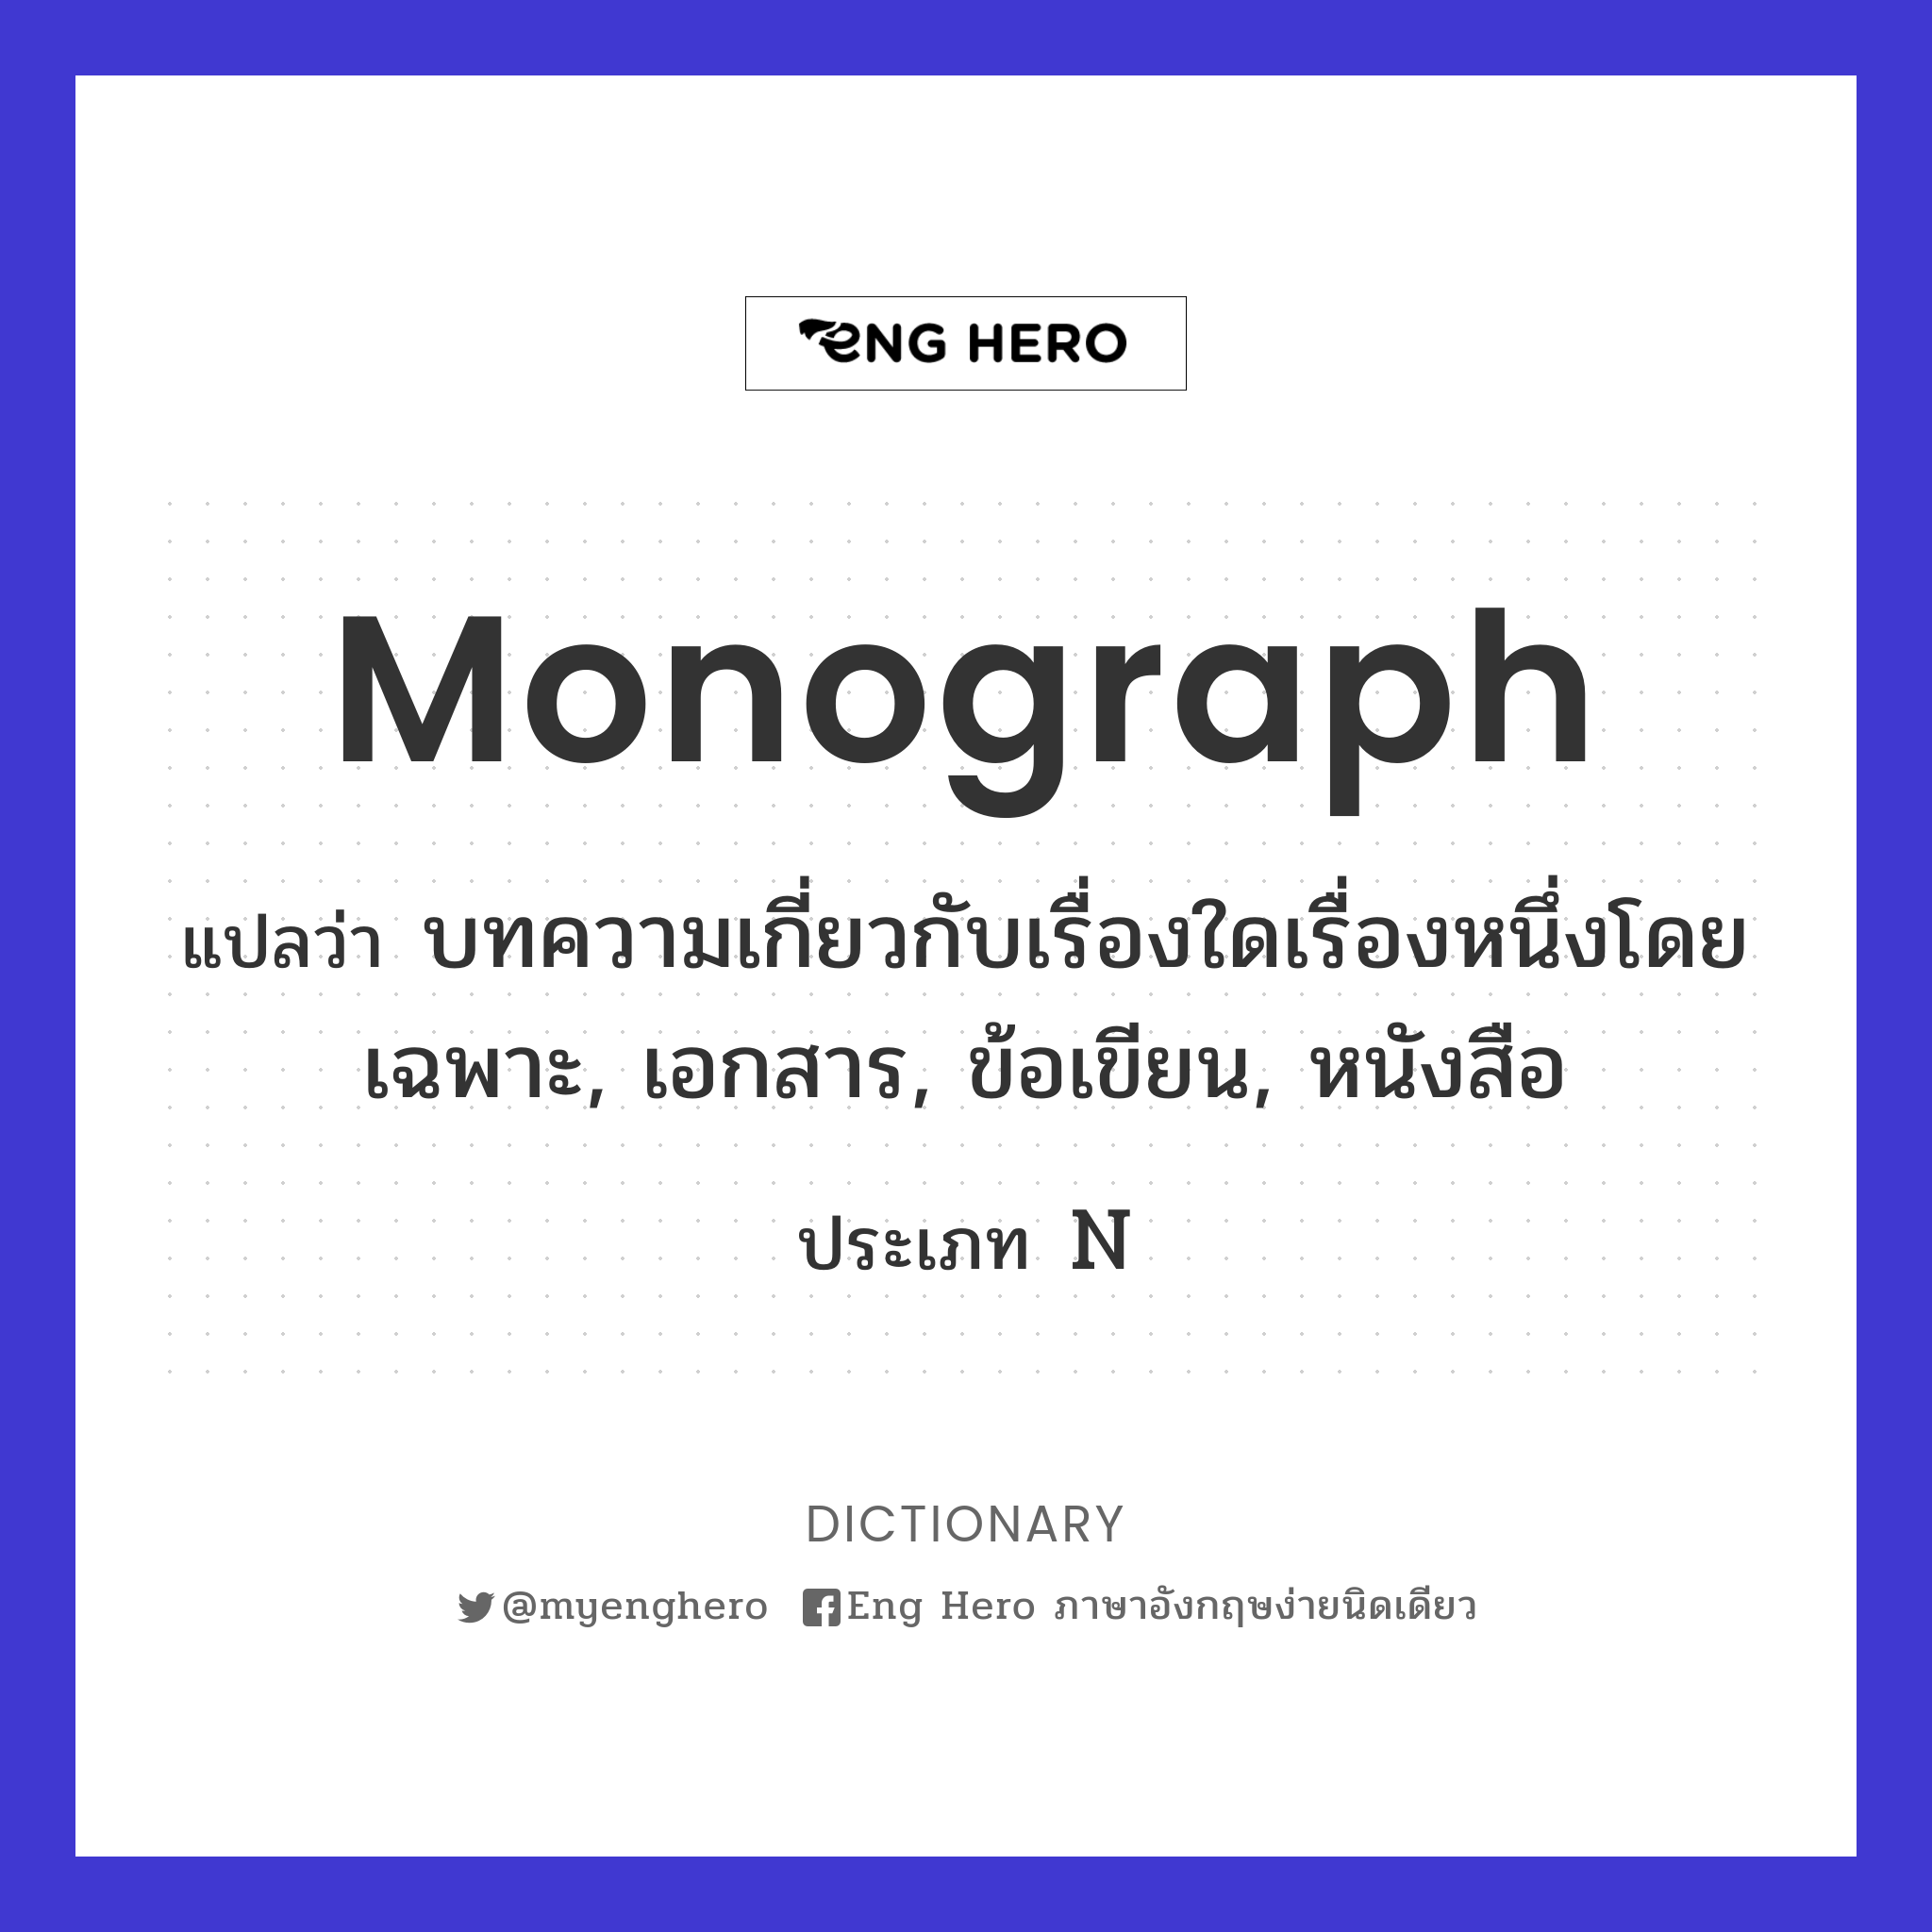 monograph